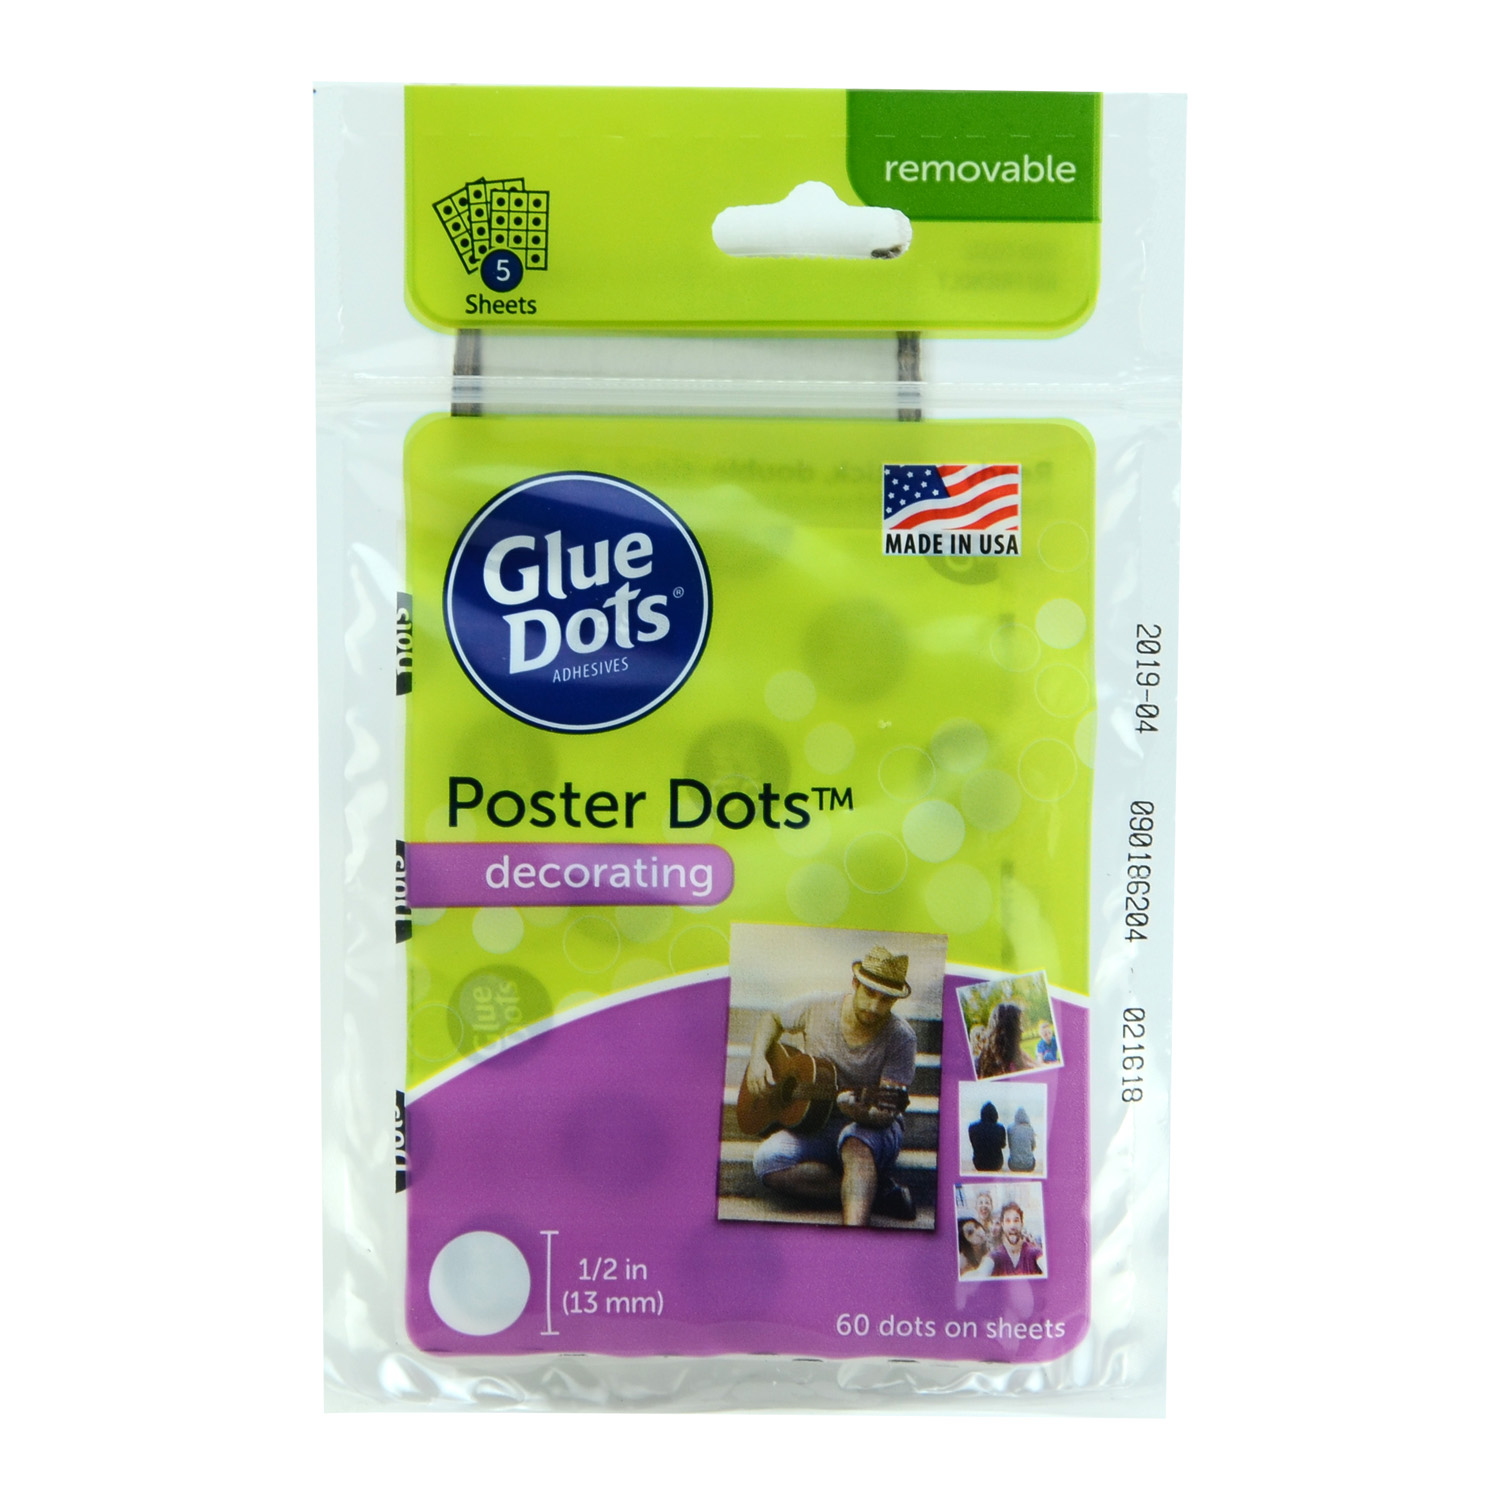 Permanent All Purpose Glue Dots® Dot N Go®